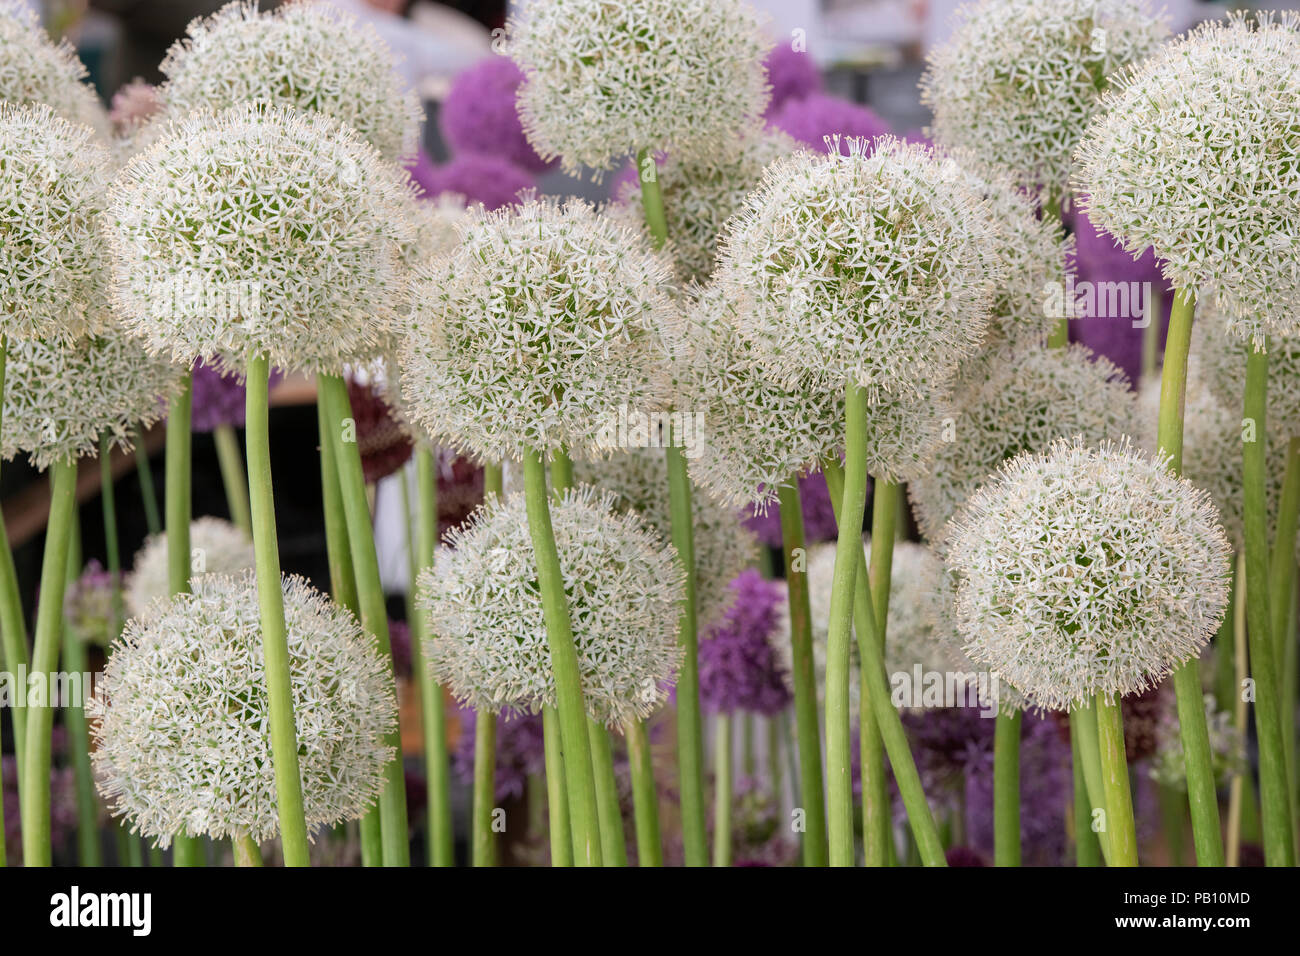 Allium ‘White giant’ flowers on a flower show display. UK Stock Photo